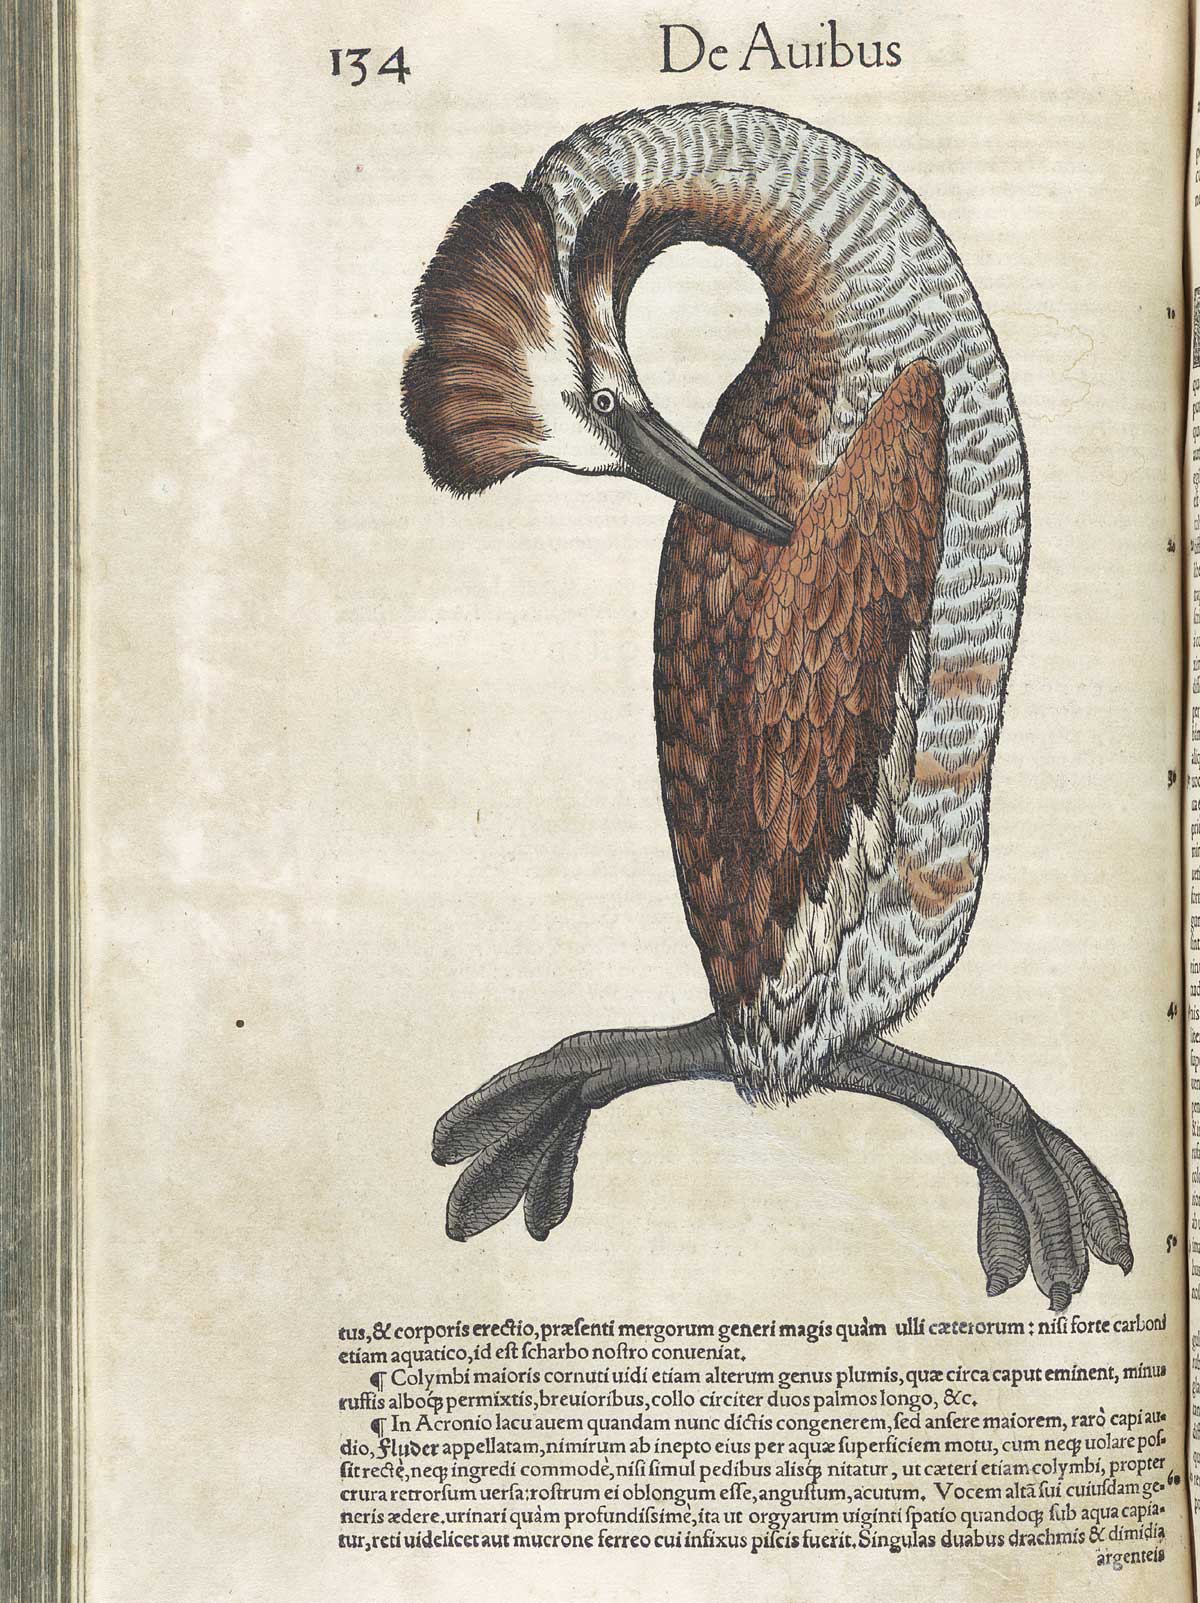 Page 134 from volume 3 of Conrad Gessner's Conradi Gesneri medici Tigurini Historiae animalium, featuring the colored woodcut of a loon or grebe.